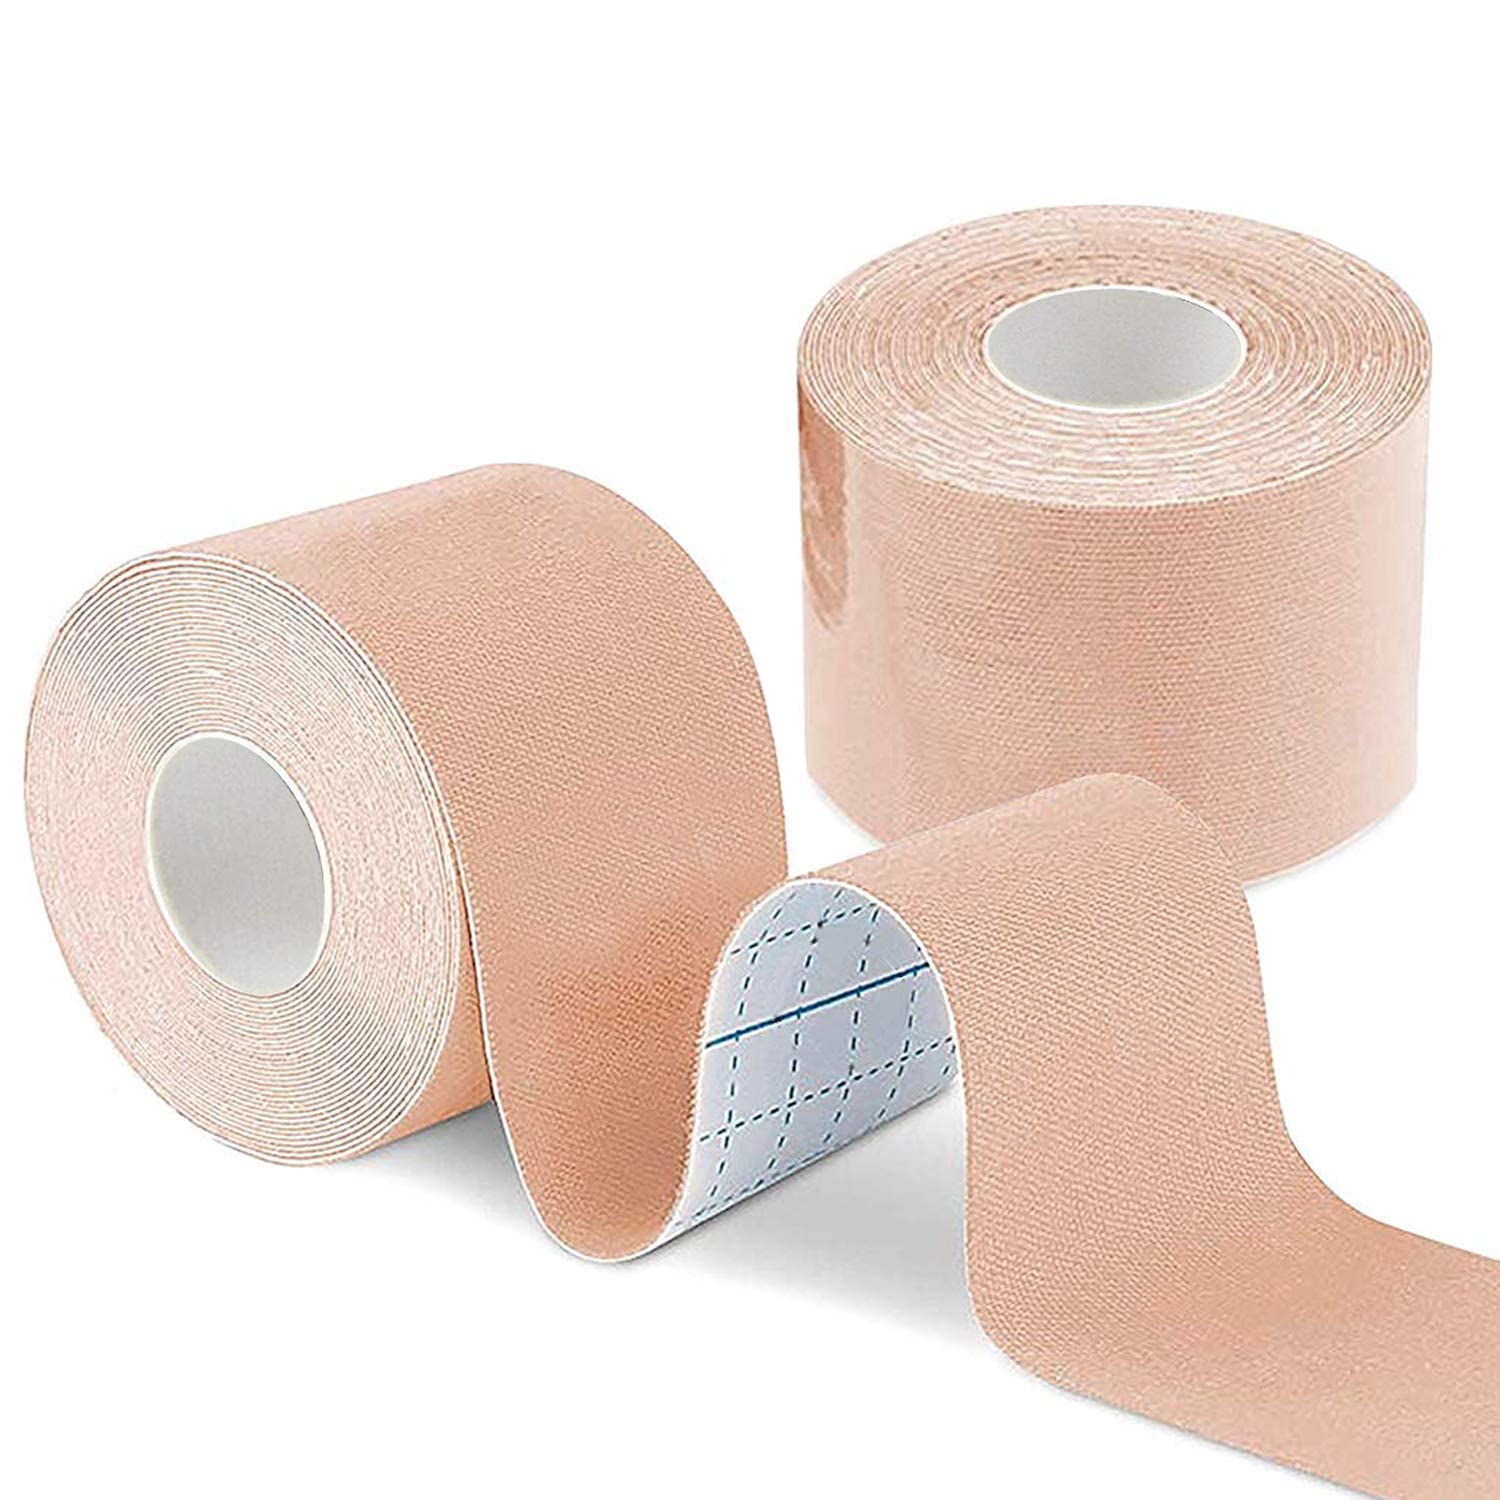 1 Roll 5m*5cm Push-up Boob Tape Breast Lift Adhensive Tape Lift Up